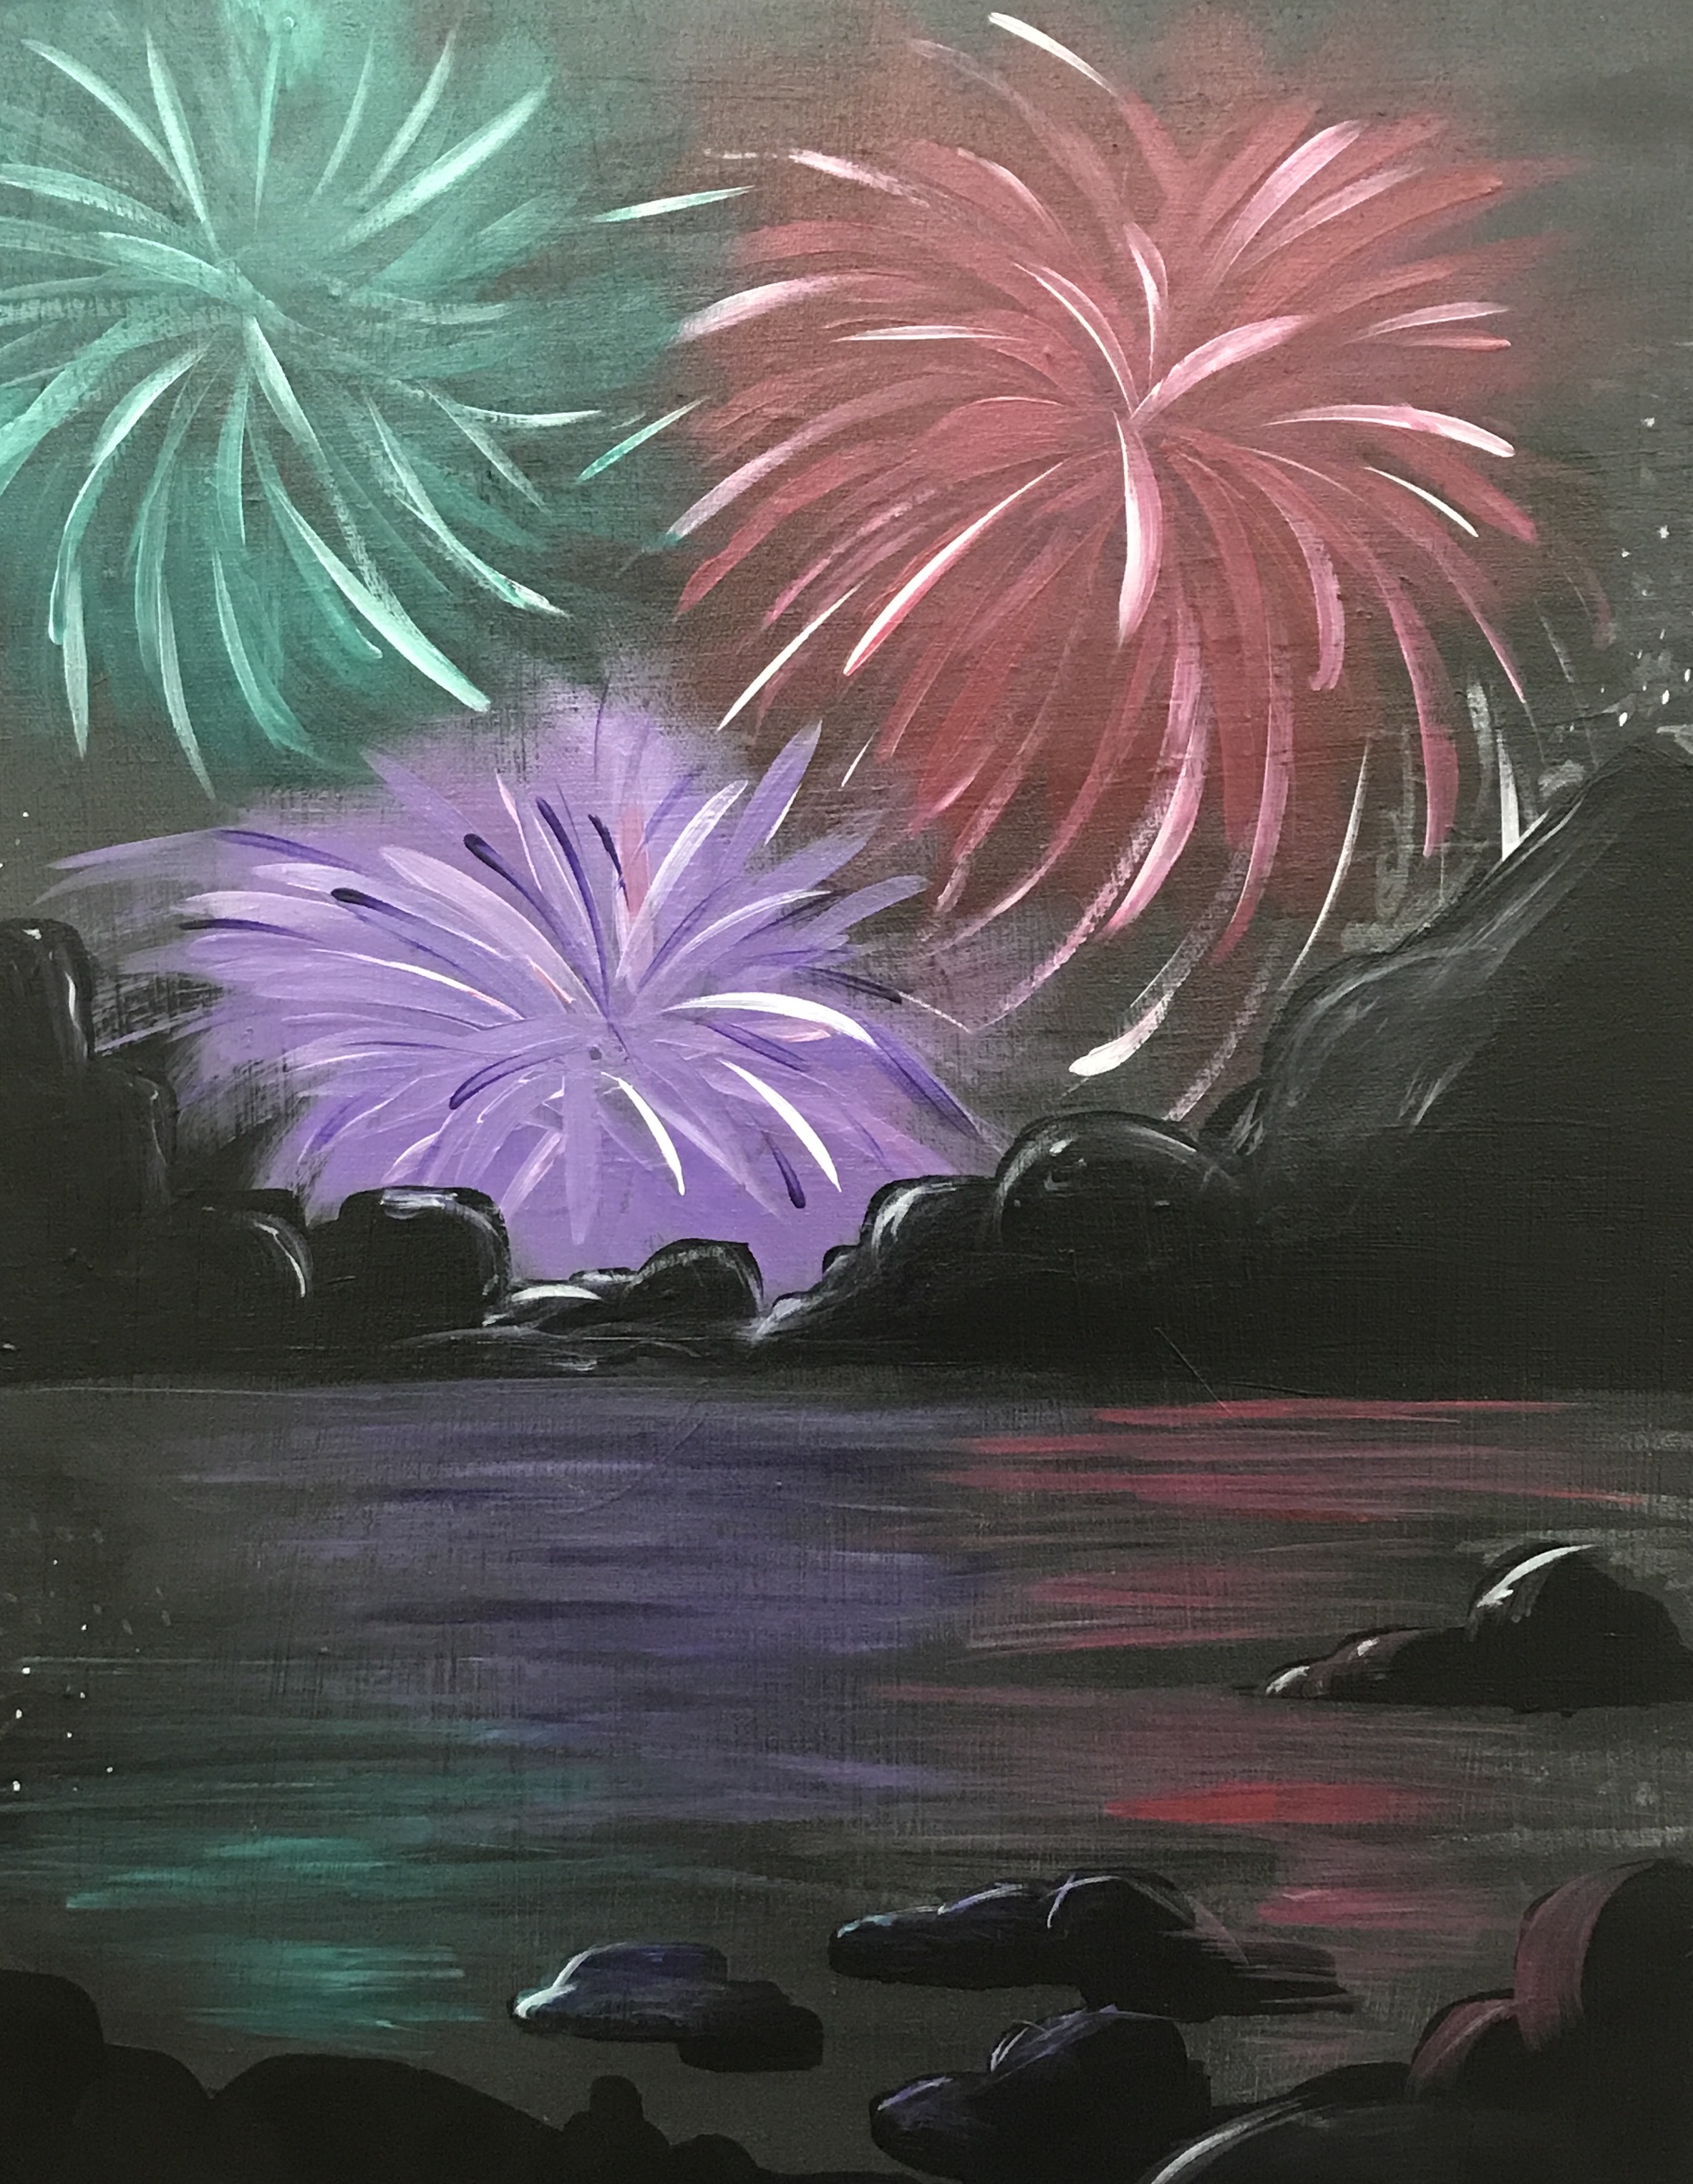 Dark Sky Brewing – Happy New Year Fireworks